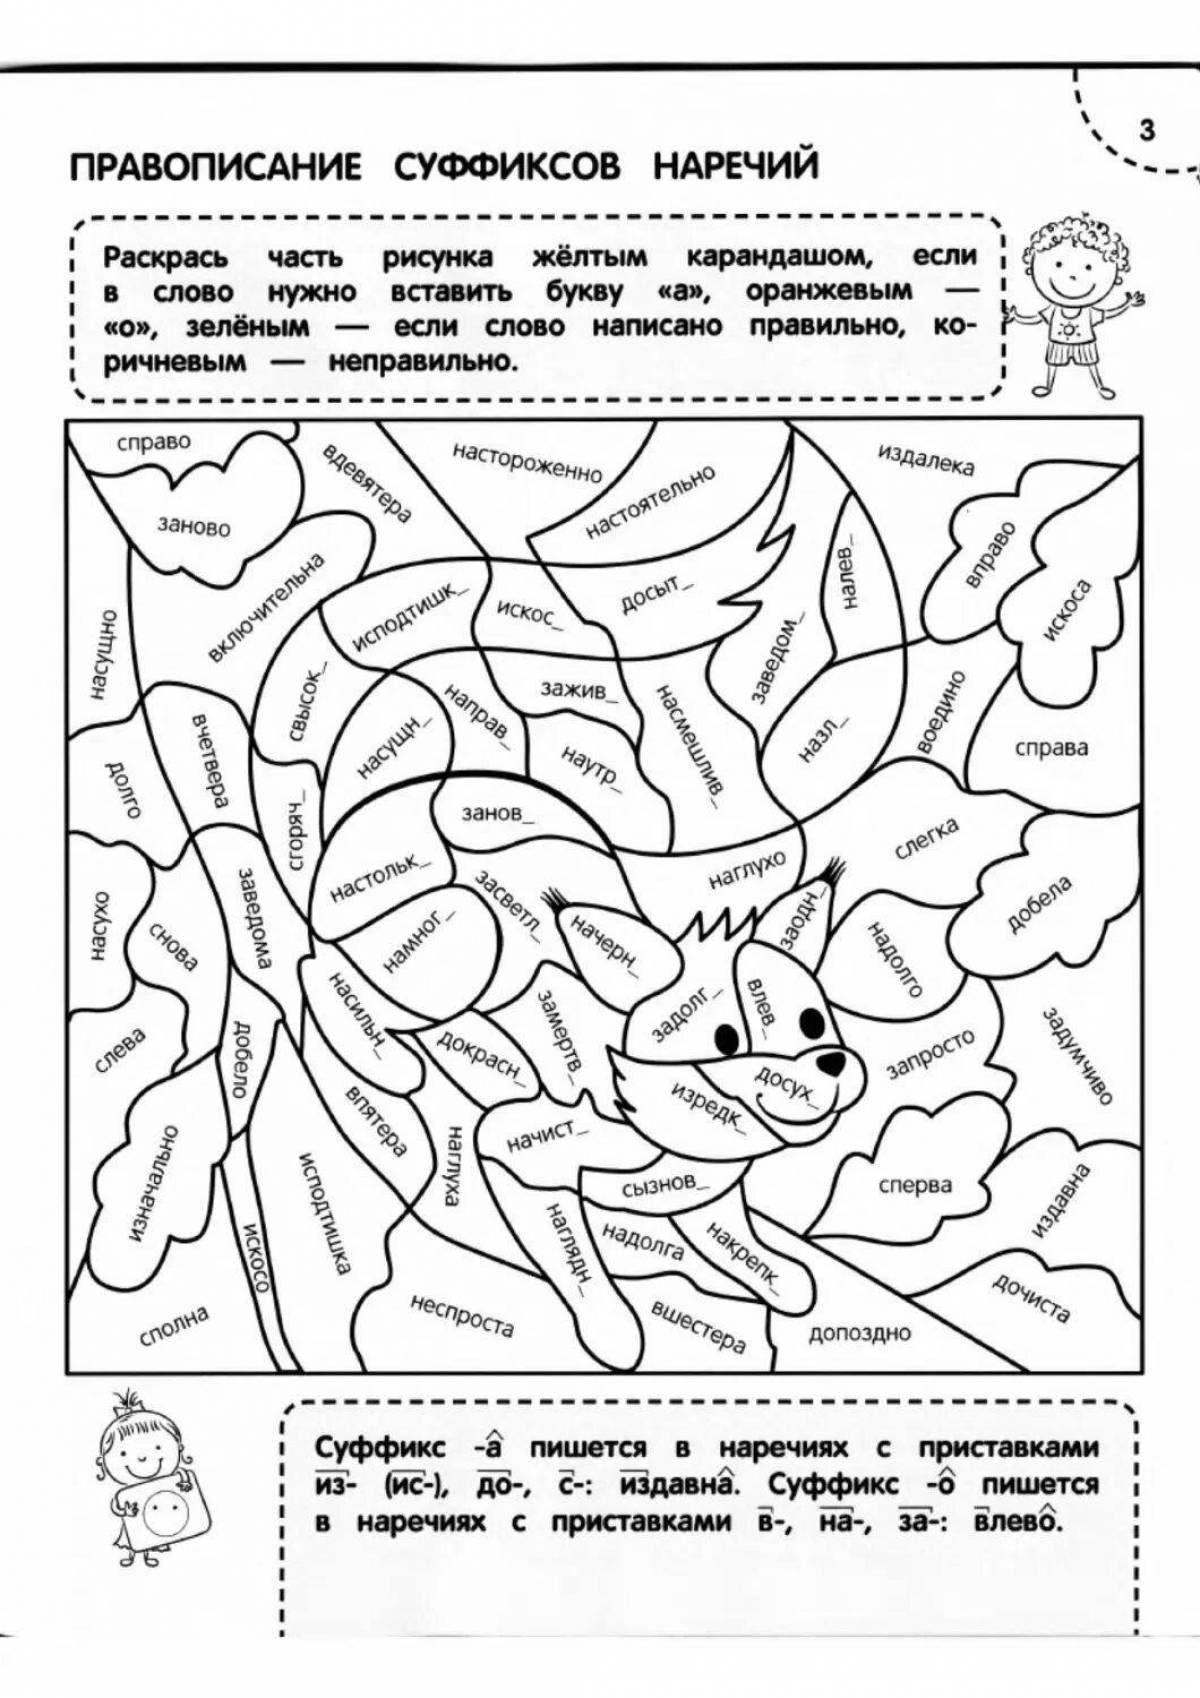 Entertaining 6th grade Russian coloring book